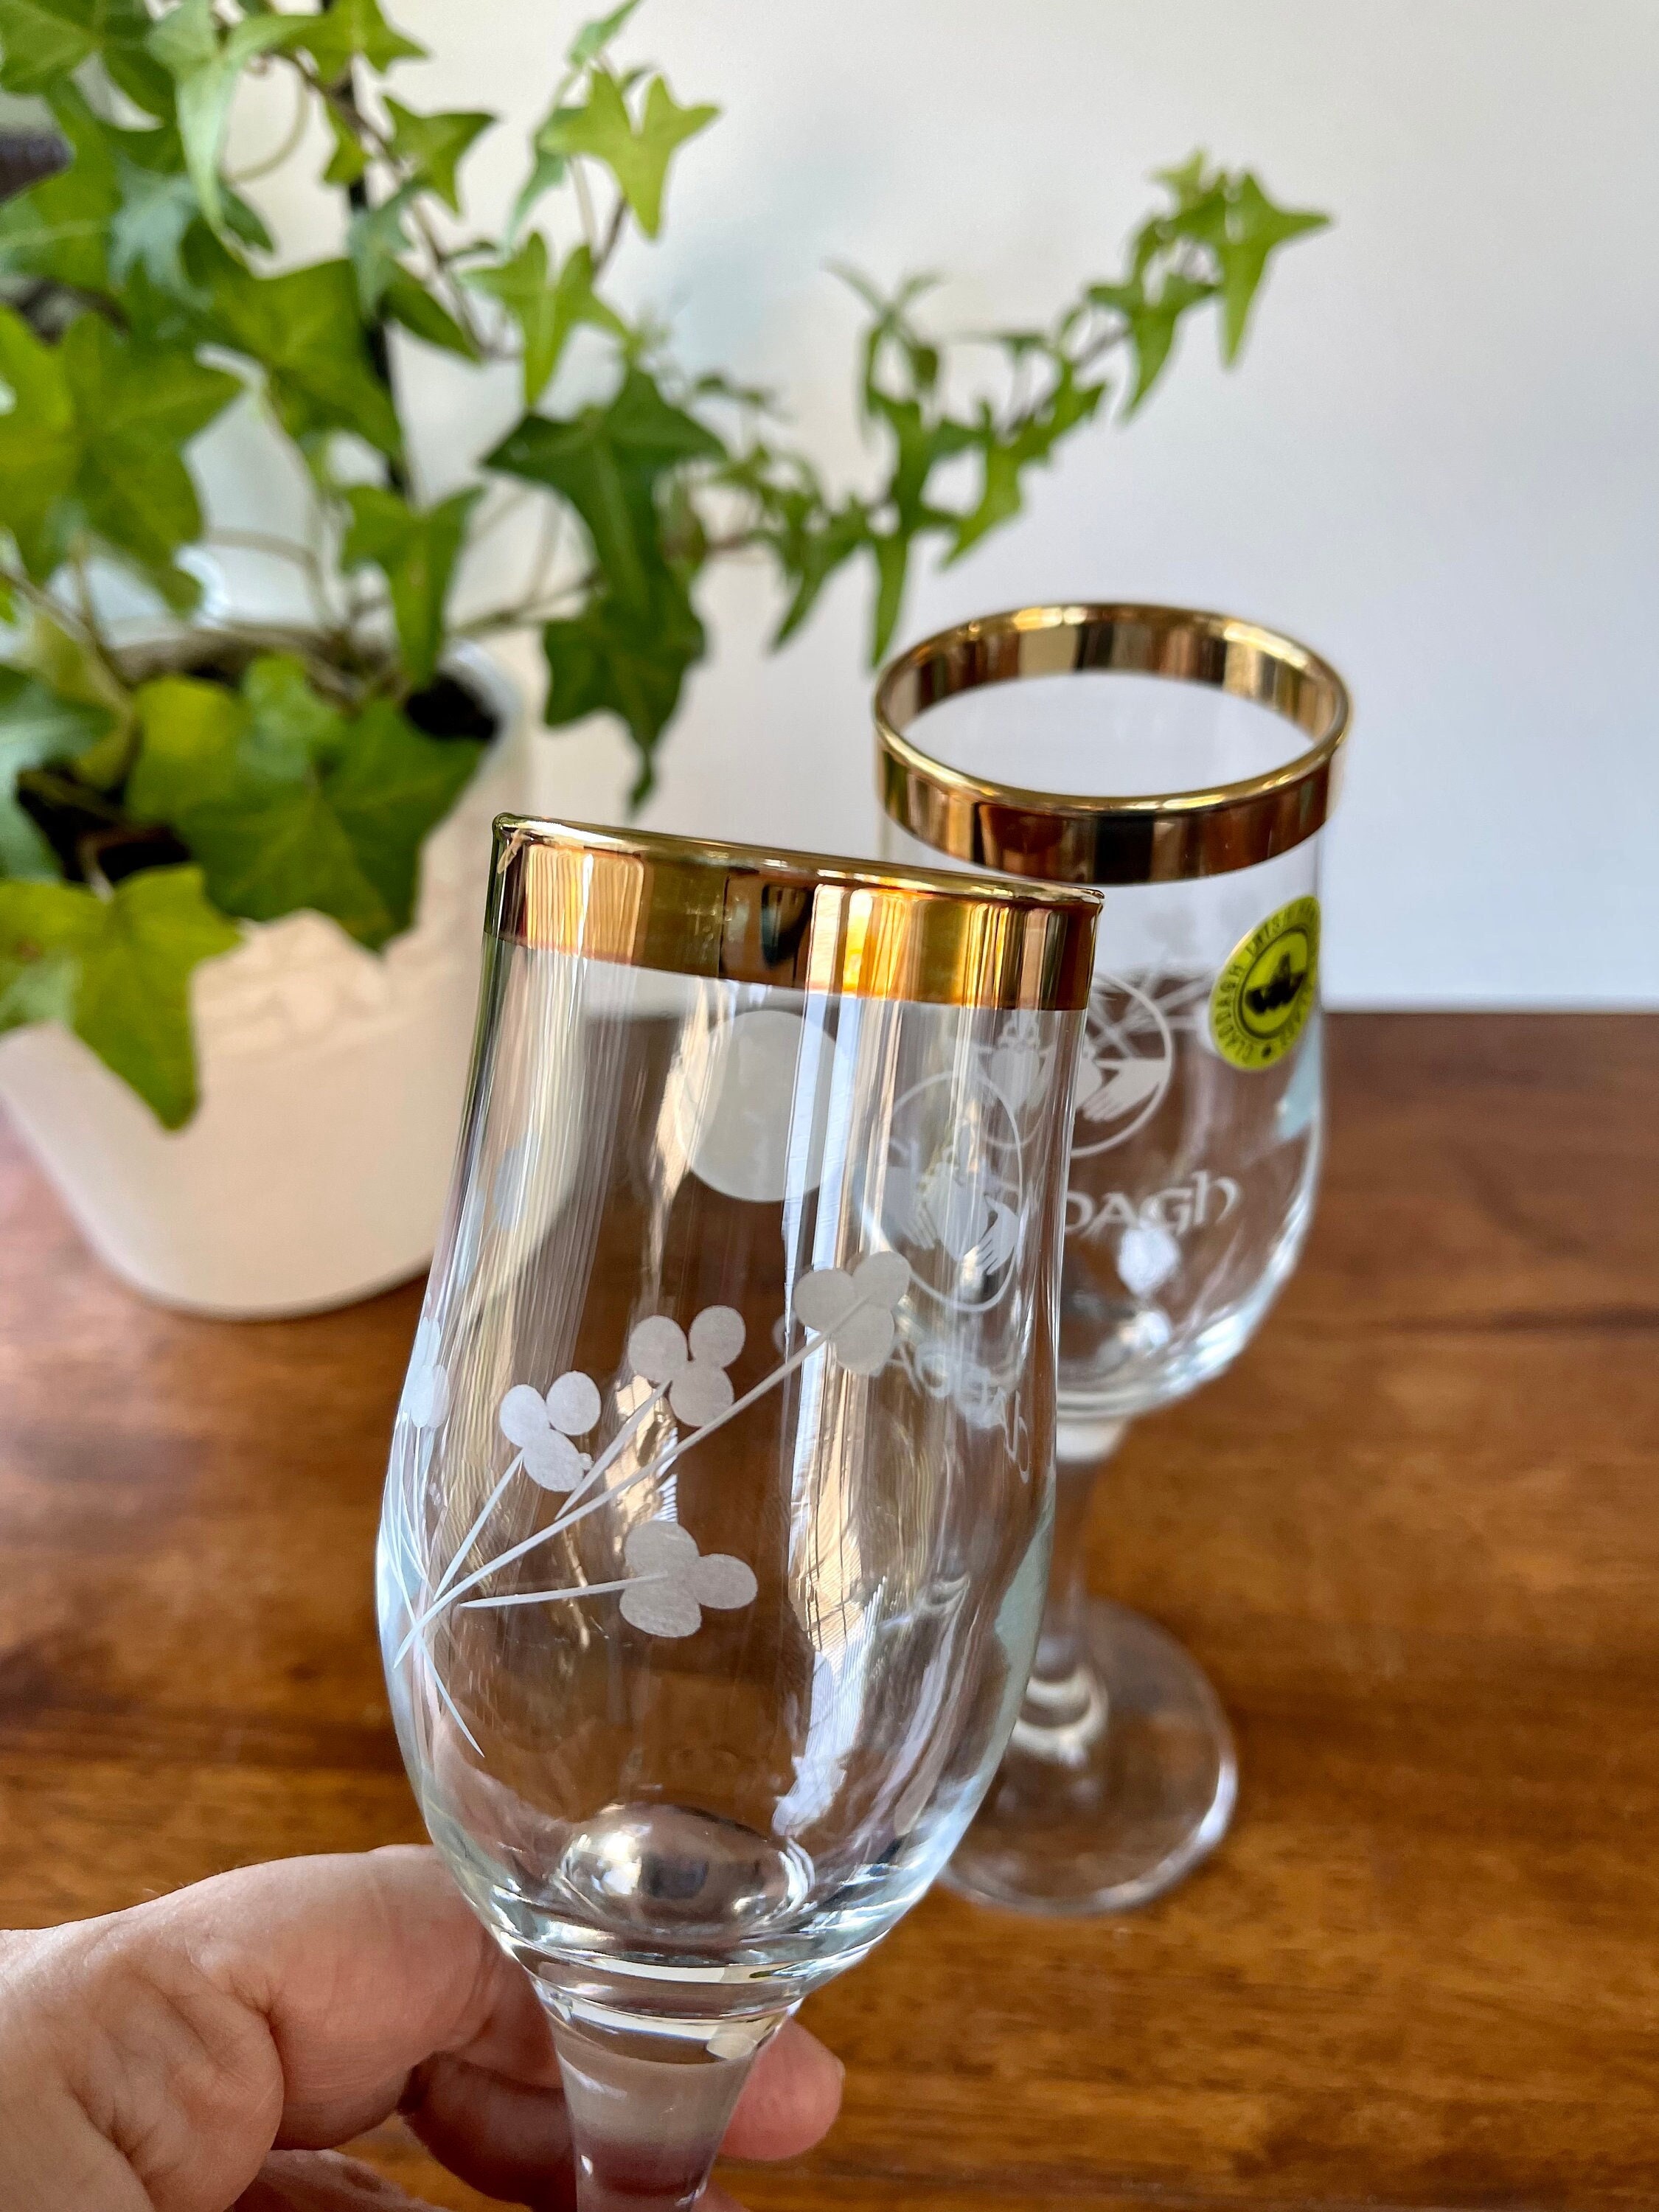 Waterford Crystal Mara Crystal Wine Glasses, Set of Two